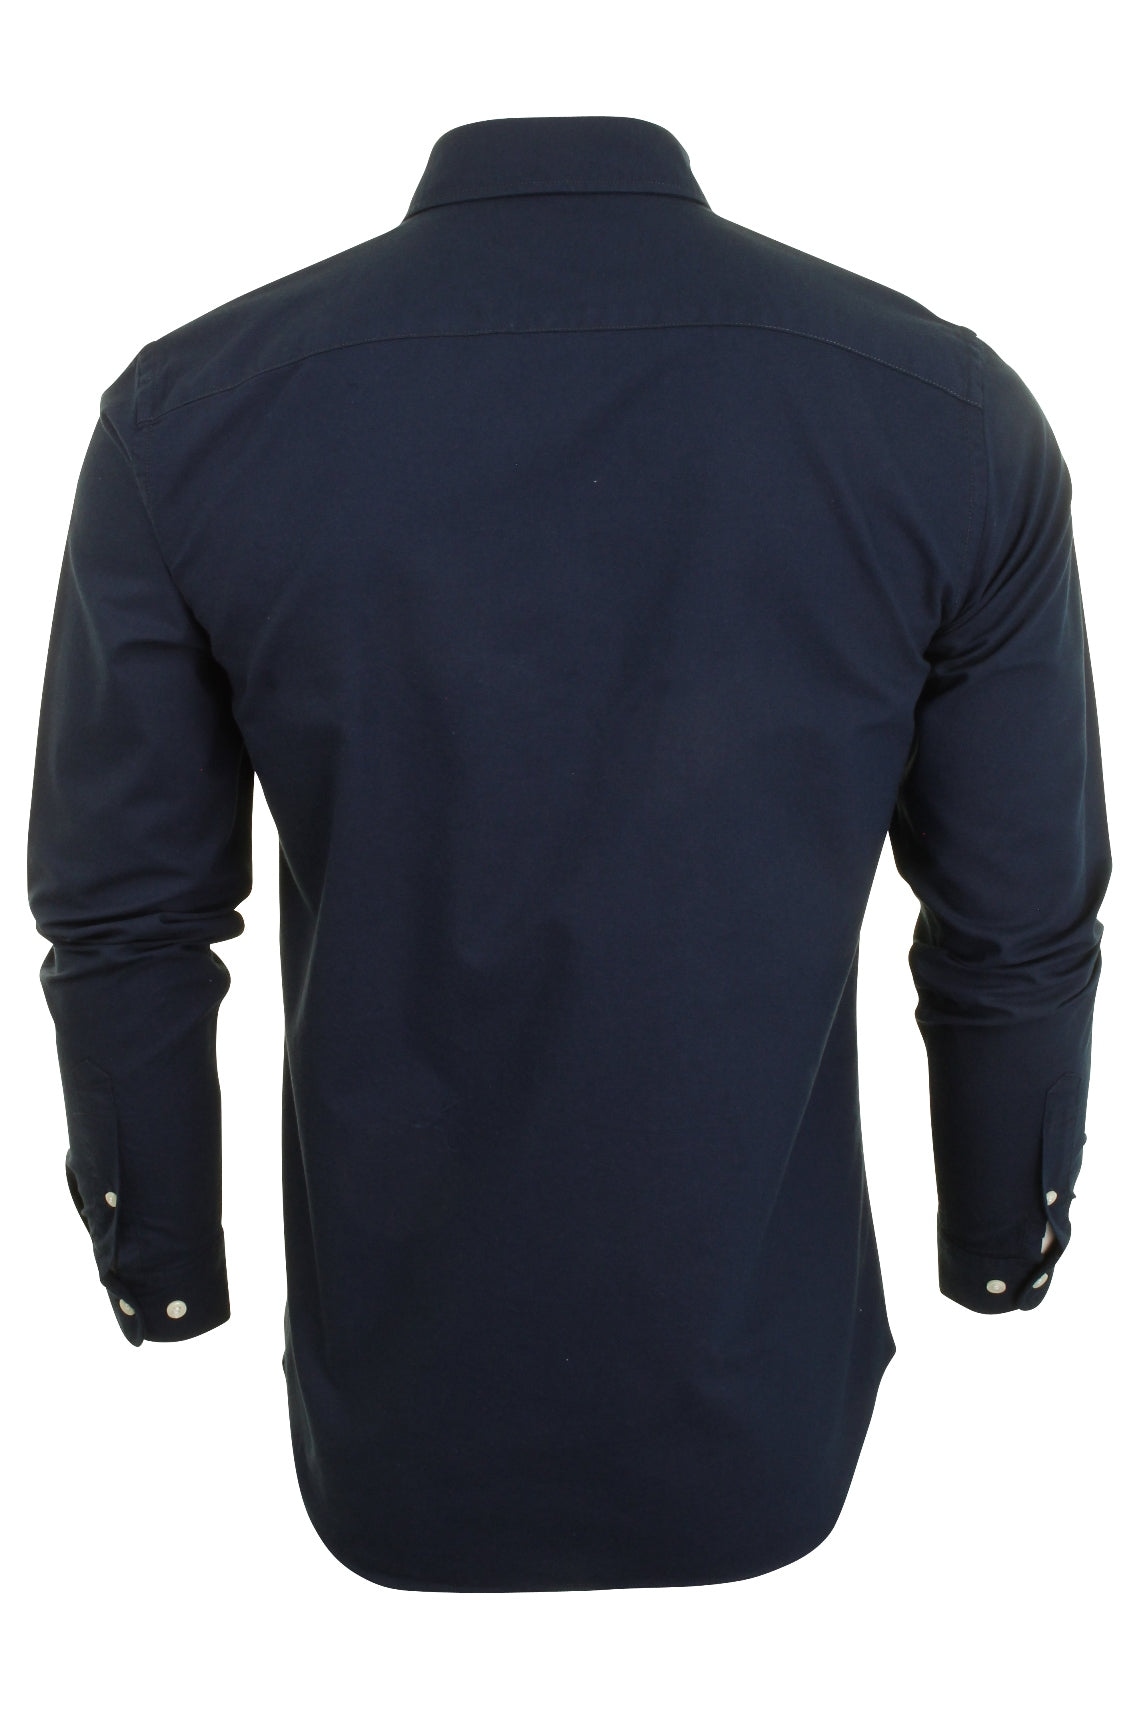 Jack & Jones Oxford Long Sleeved Shirt (Navy Blazer, S), 03, 12138086, Navy Blazer